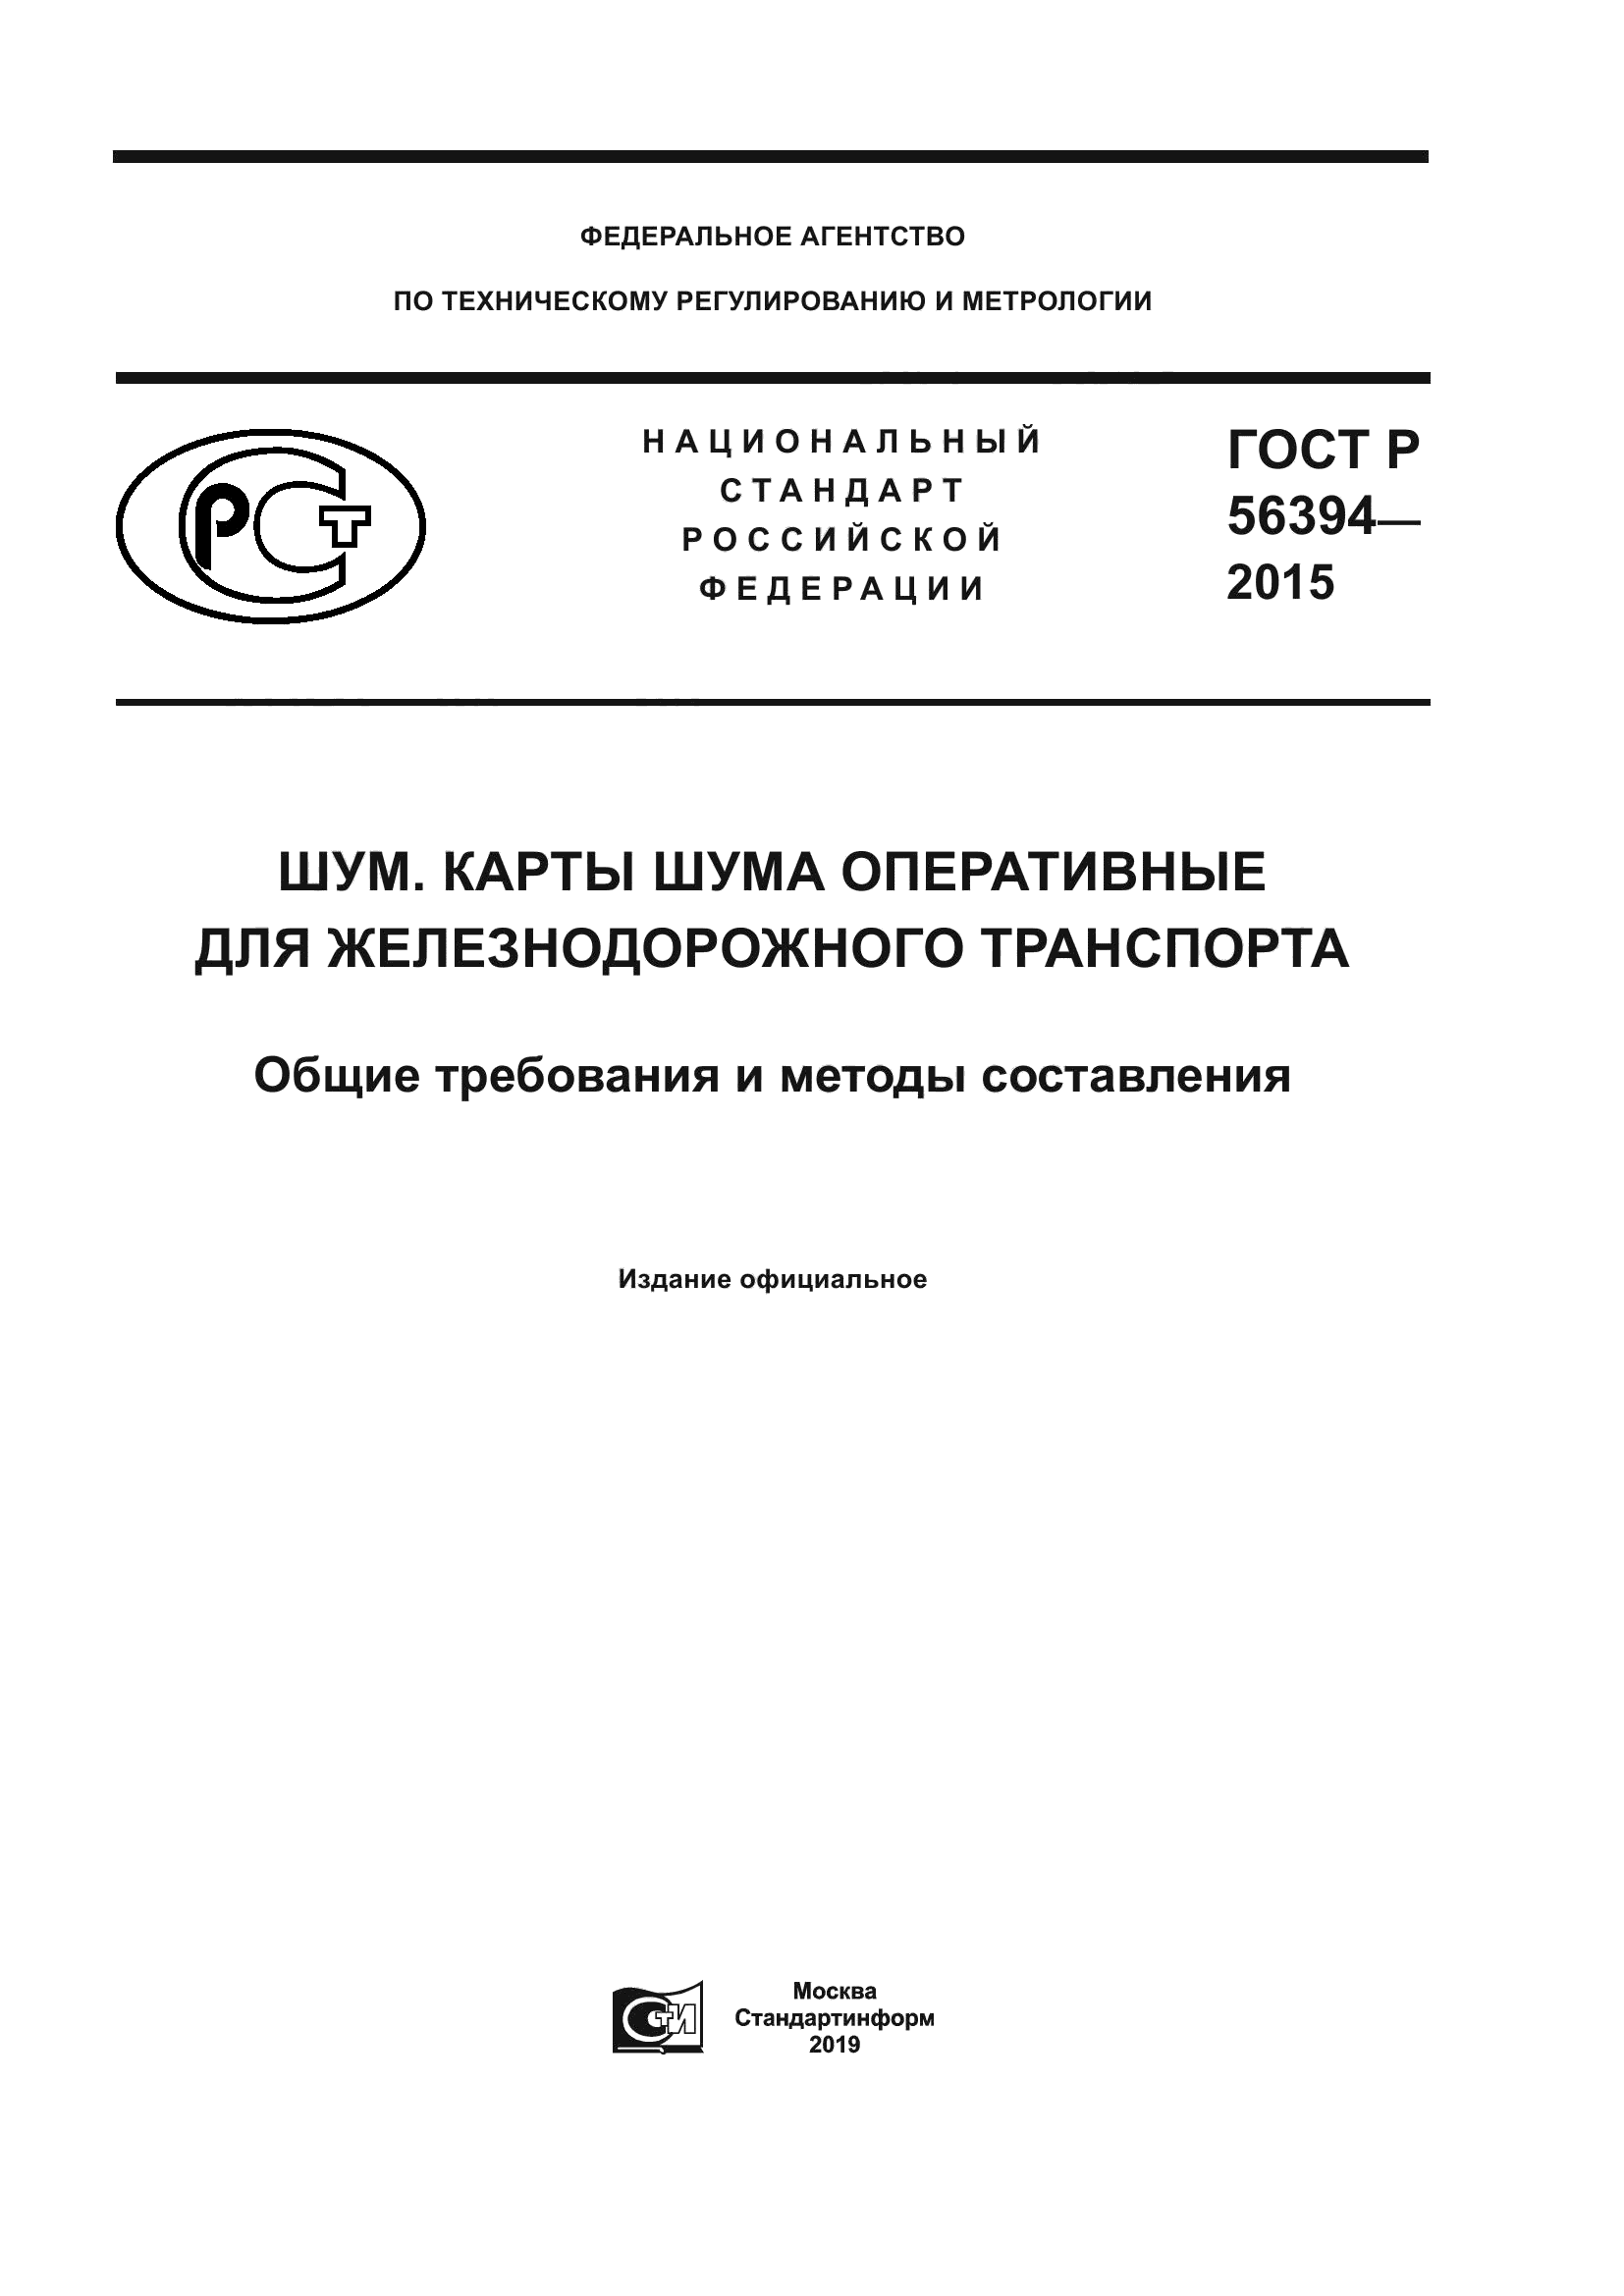 ГОСТ Р 56394-2015